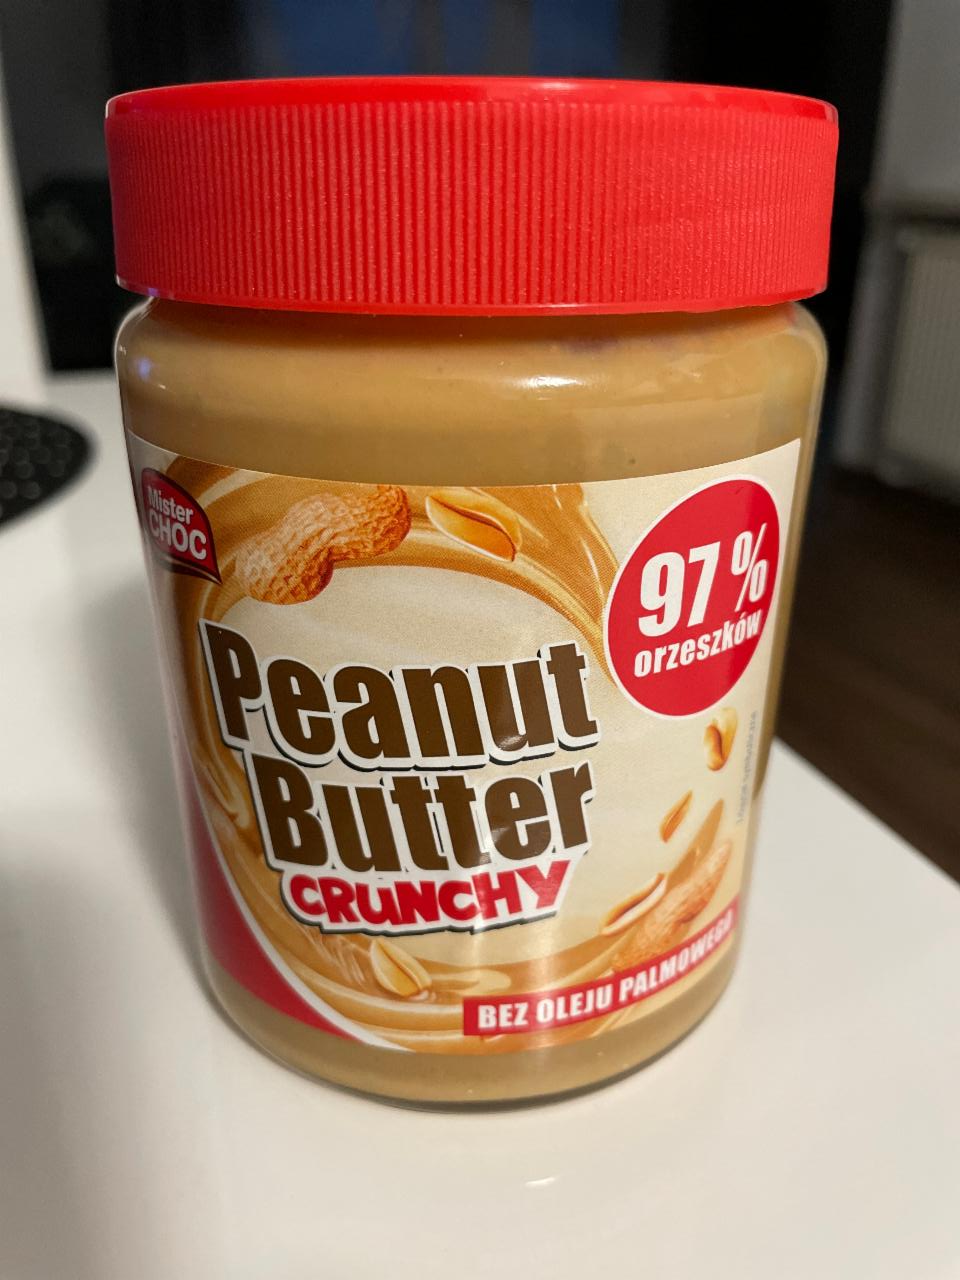 Zdjęcia - Peanut Butter crunchy Mister Choc